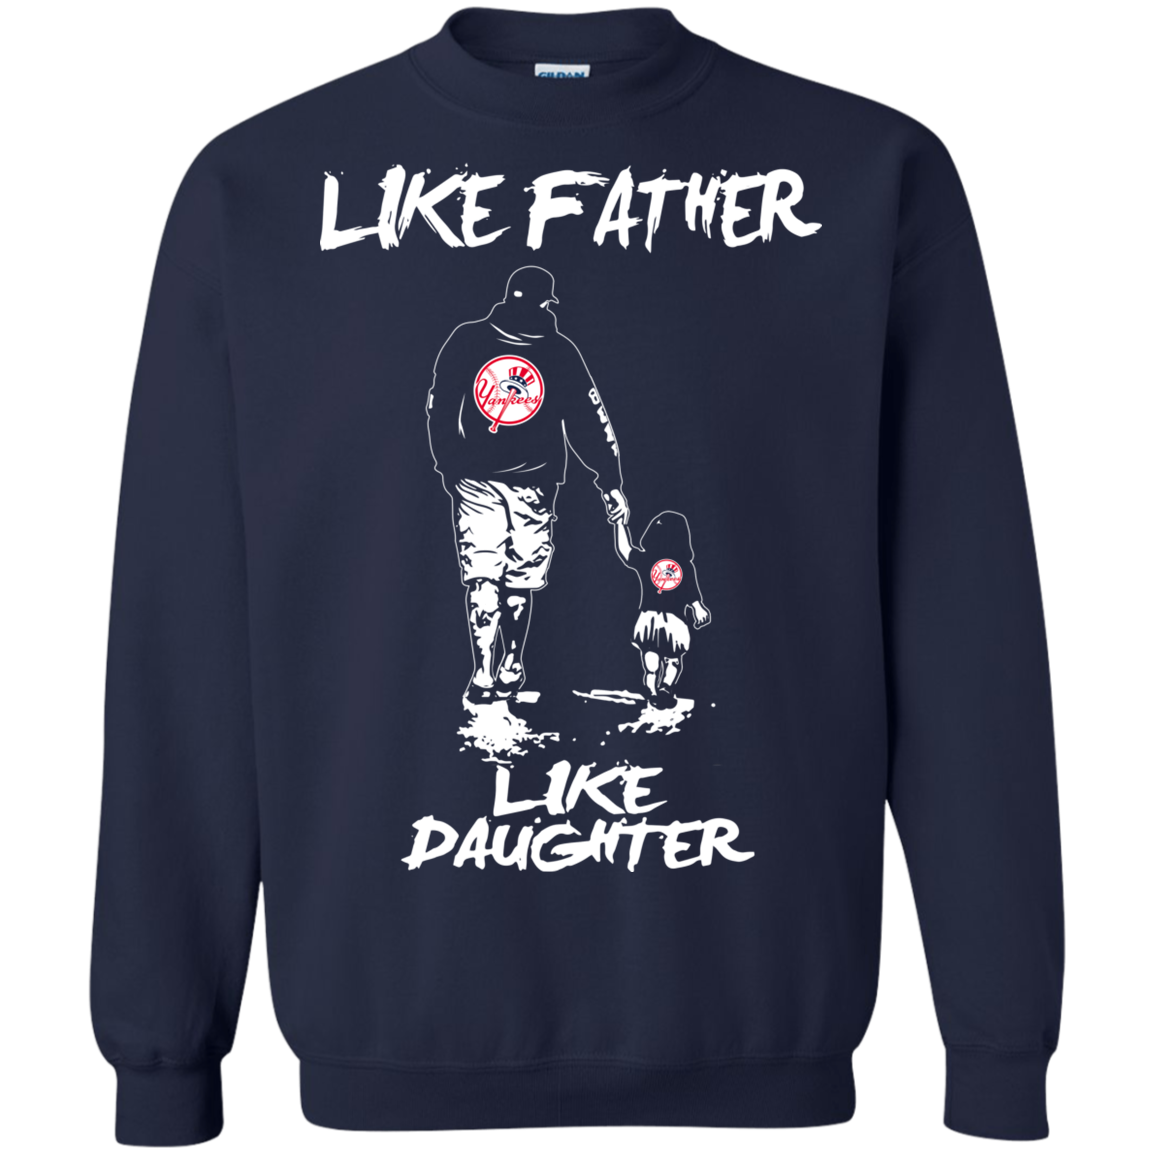 father daughter yankee shirt